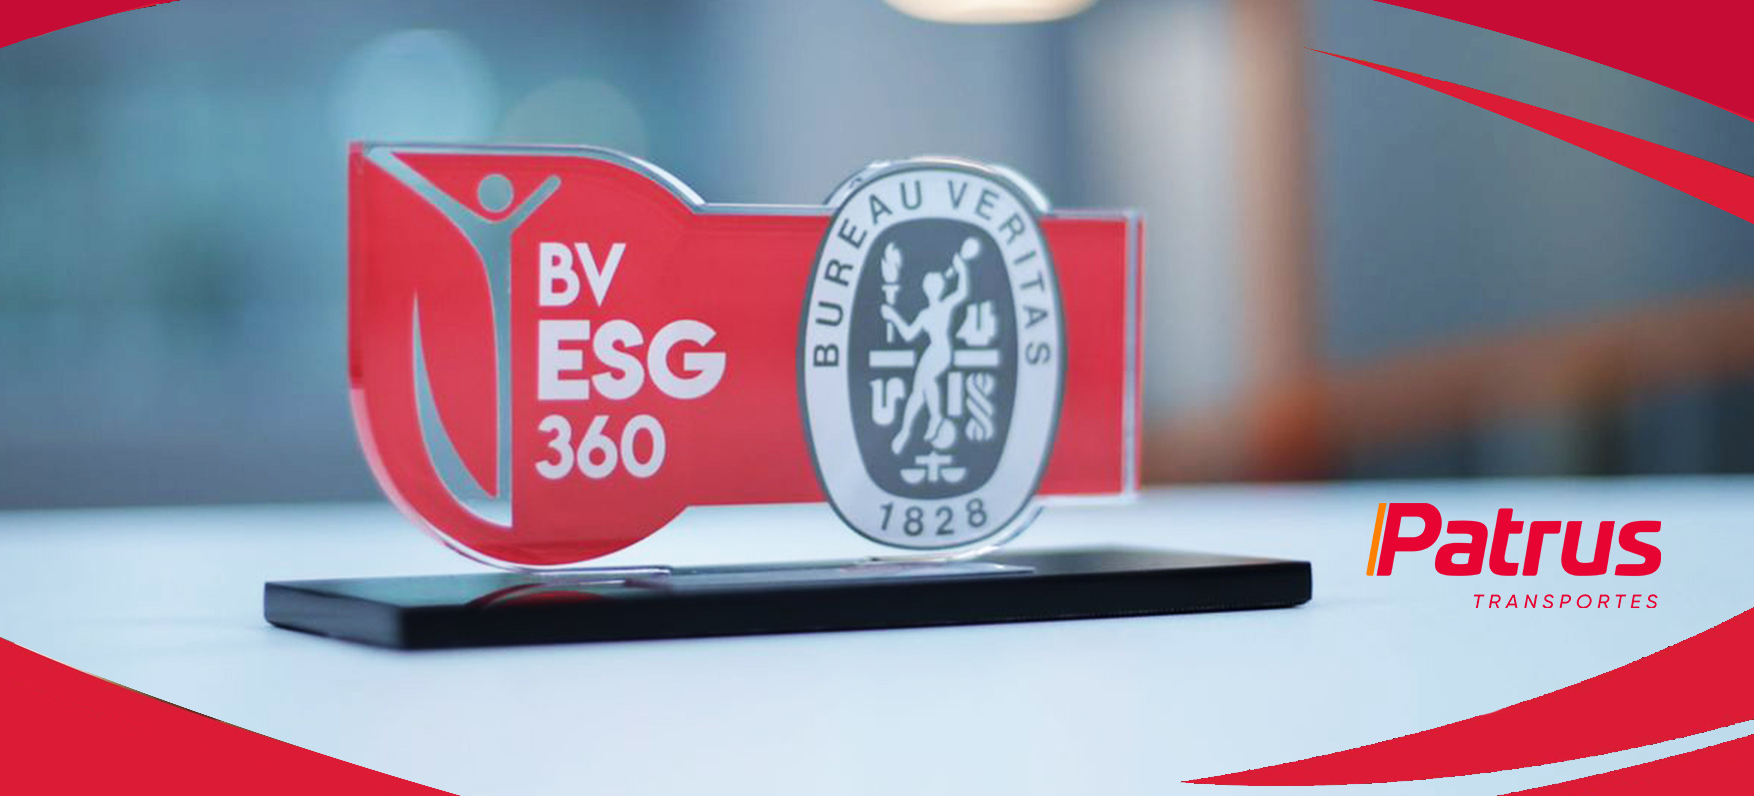 Primeira empresa do Brasil a conquistar o selo BV ESG 360